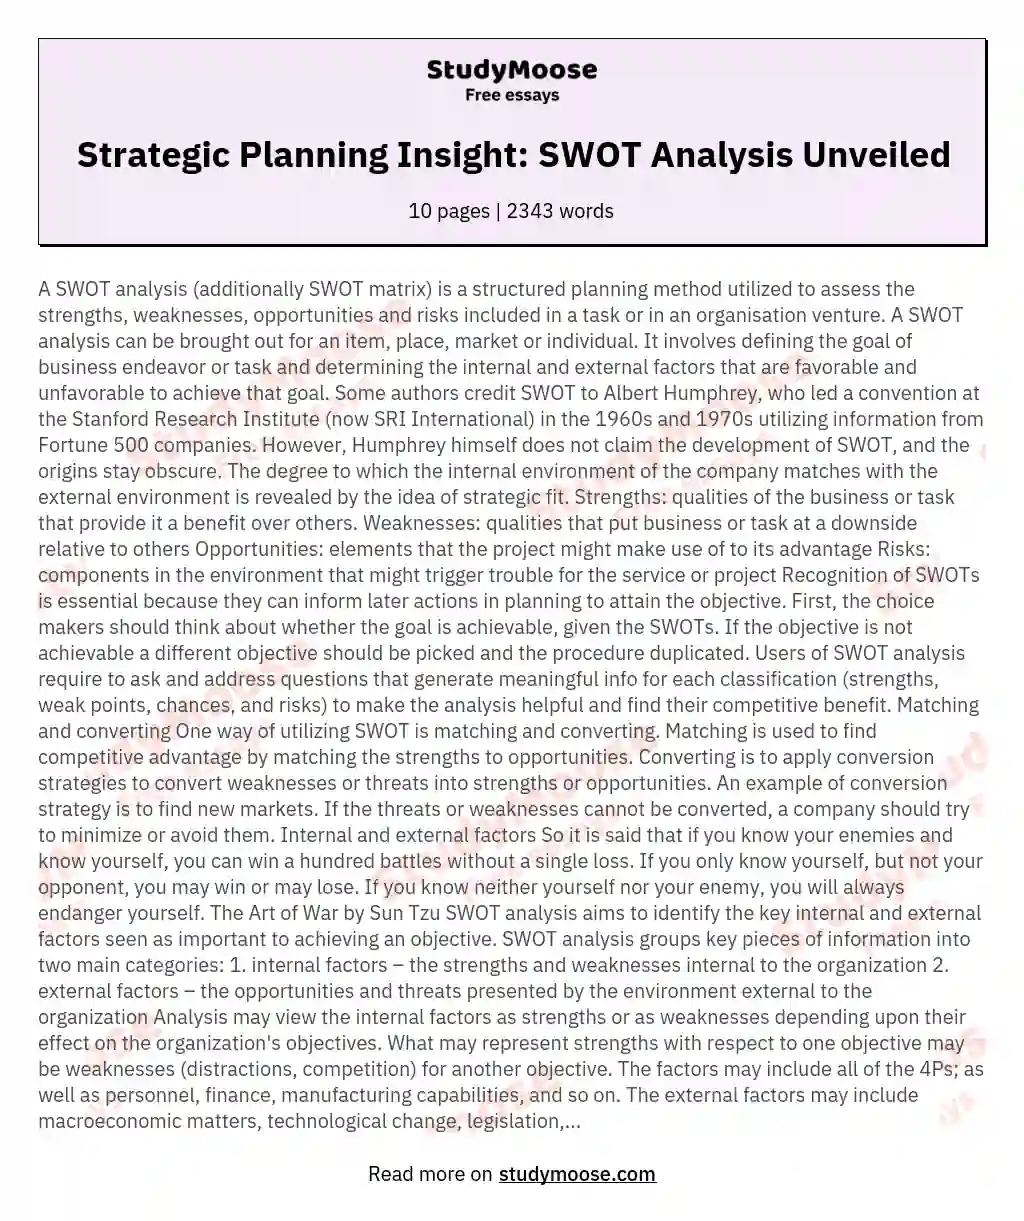 Strategic Planning Insight: SWOT Analysis Unveiled essay